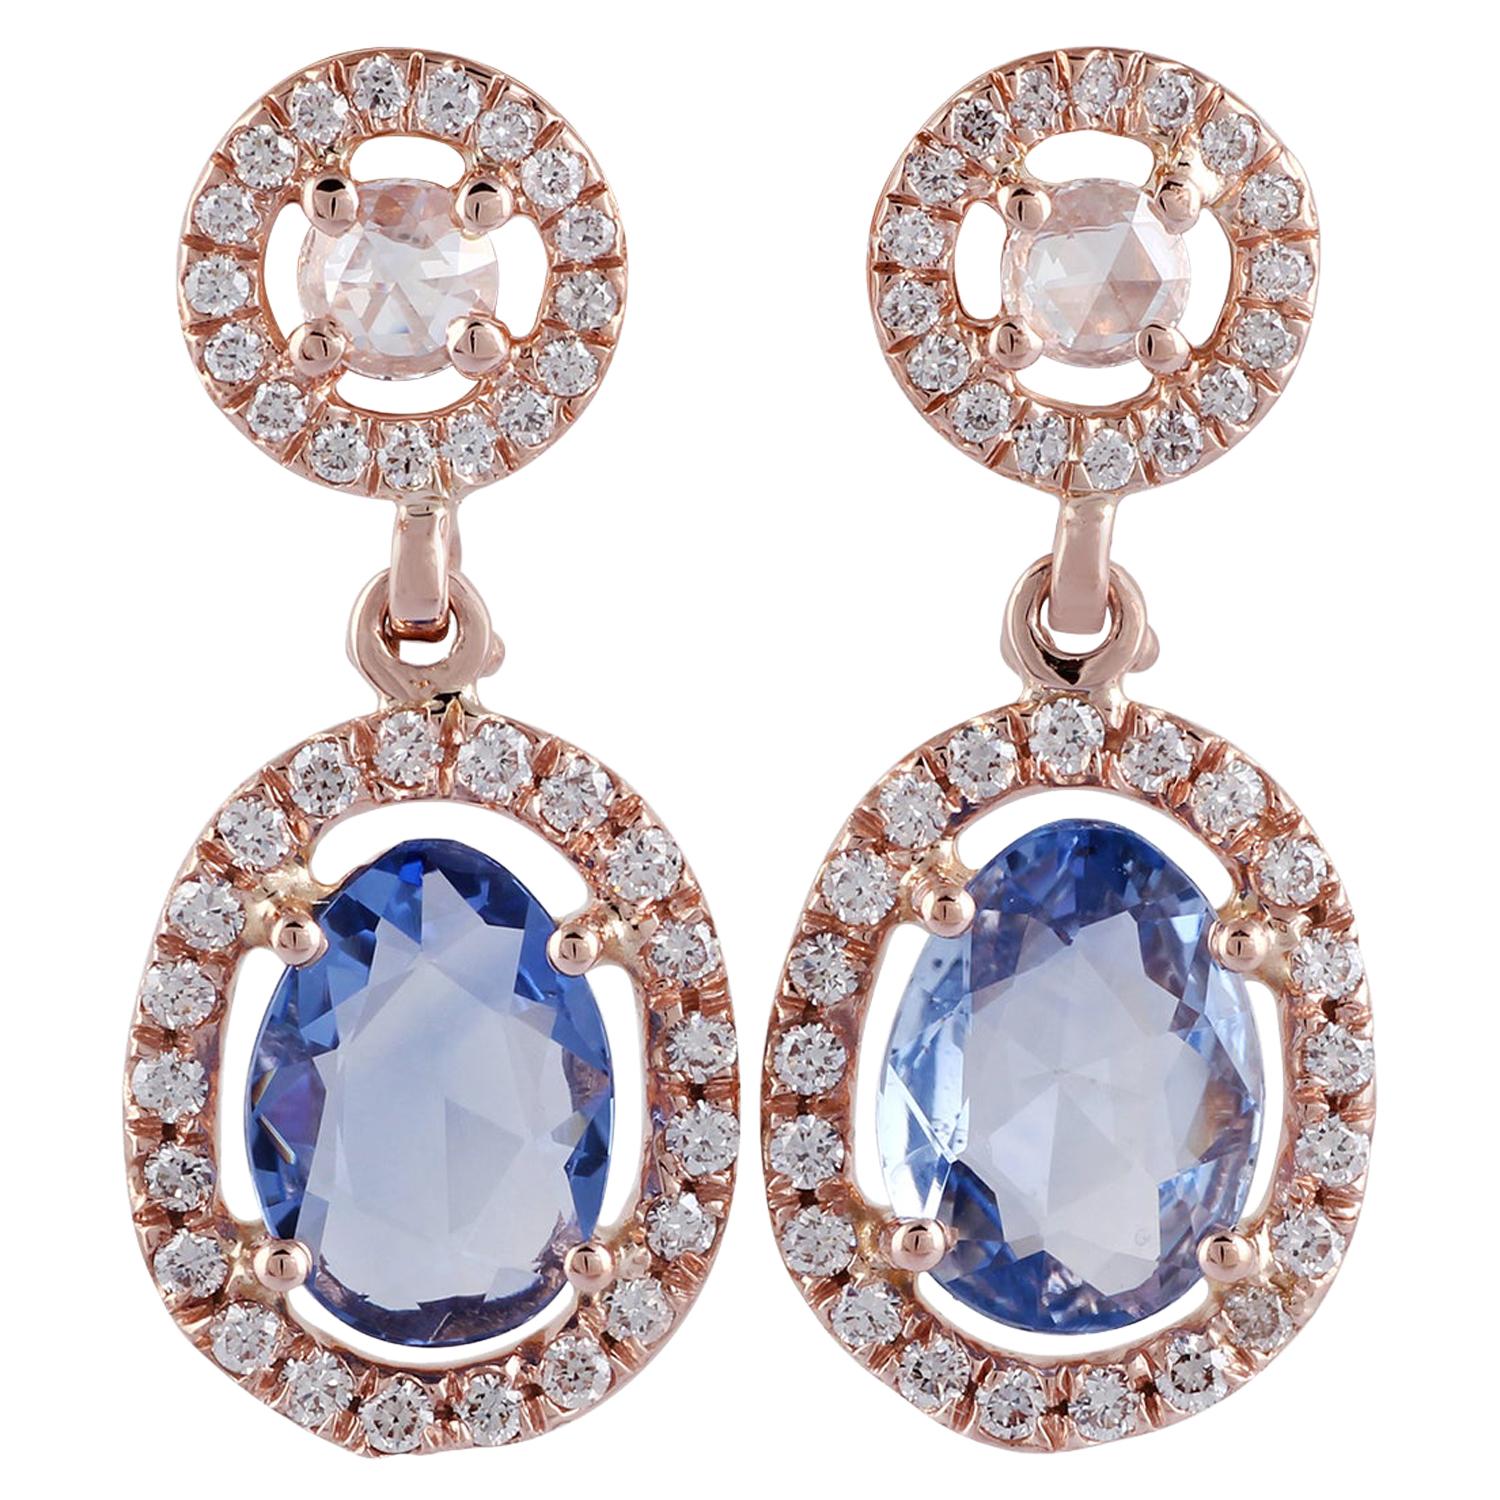 2.03 Carat Blue Sapphire and Diamond Earring Studded in 18 Karat Rose Gold